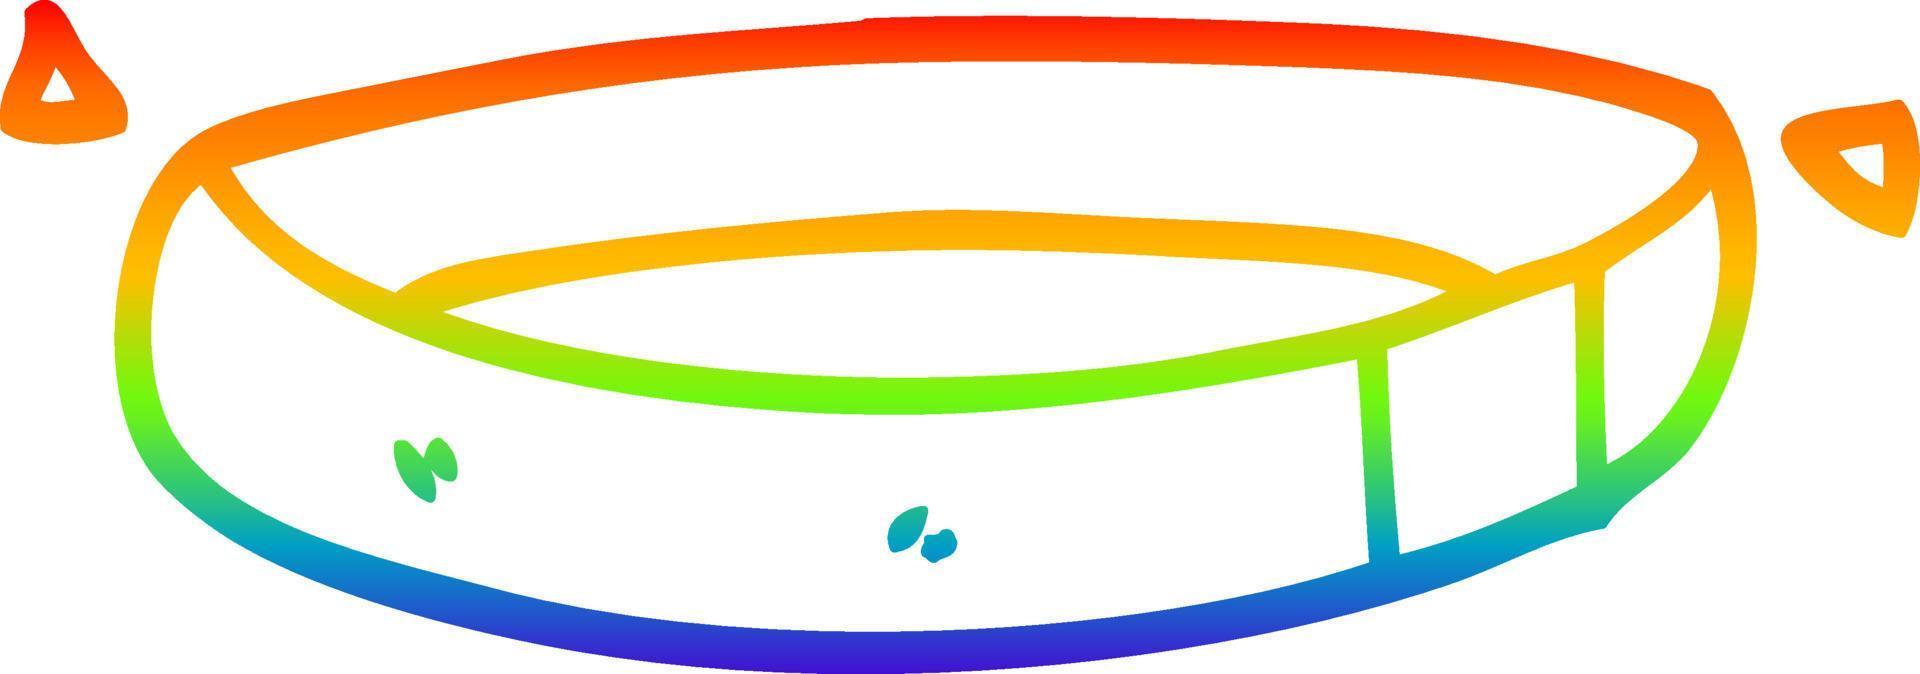 rainbow gradient line drawing cartoon dog collar vector